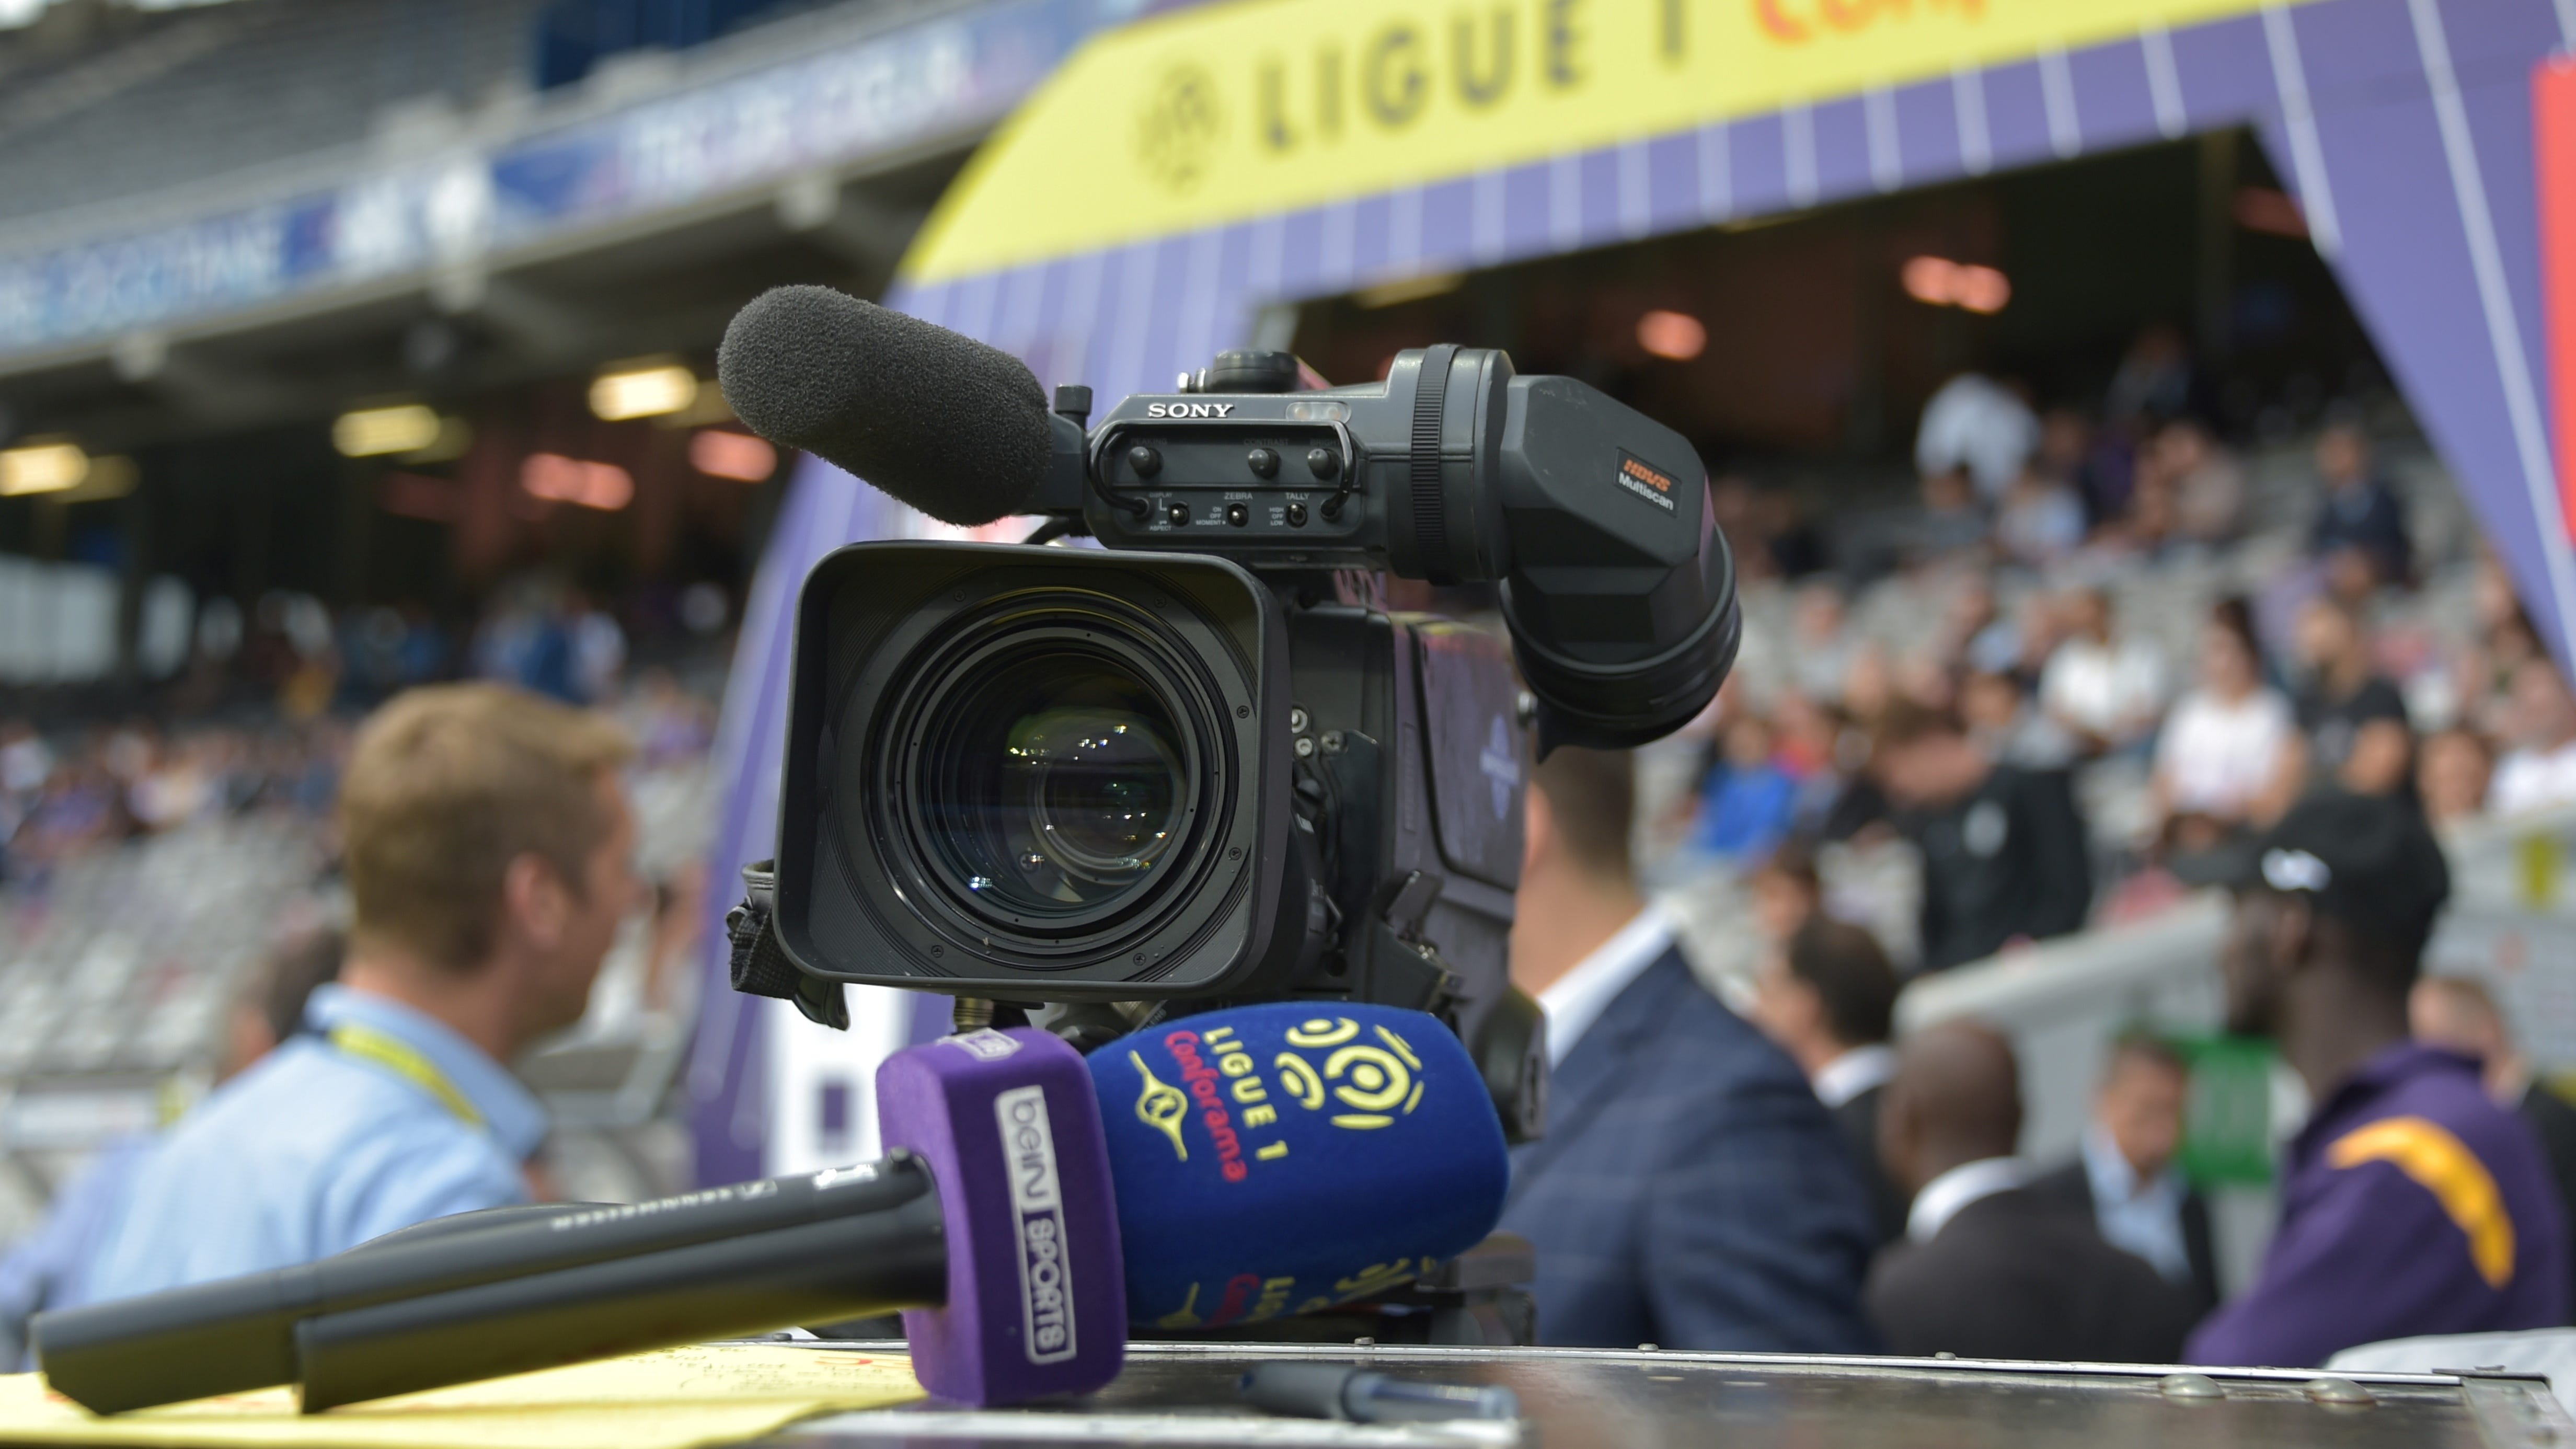 Ligue 1 TV camera microphone